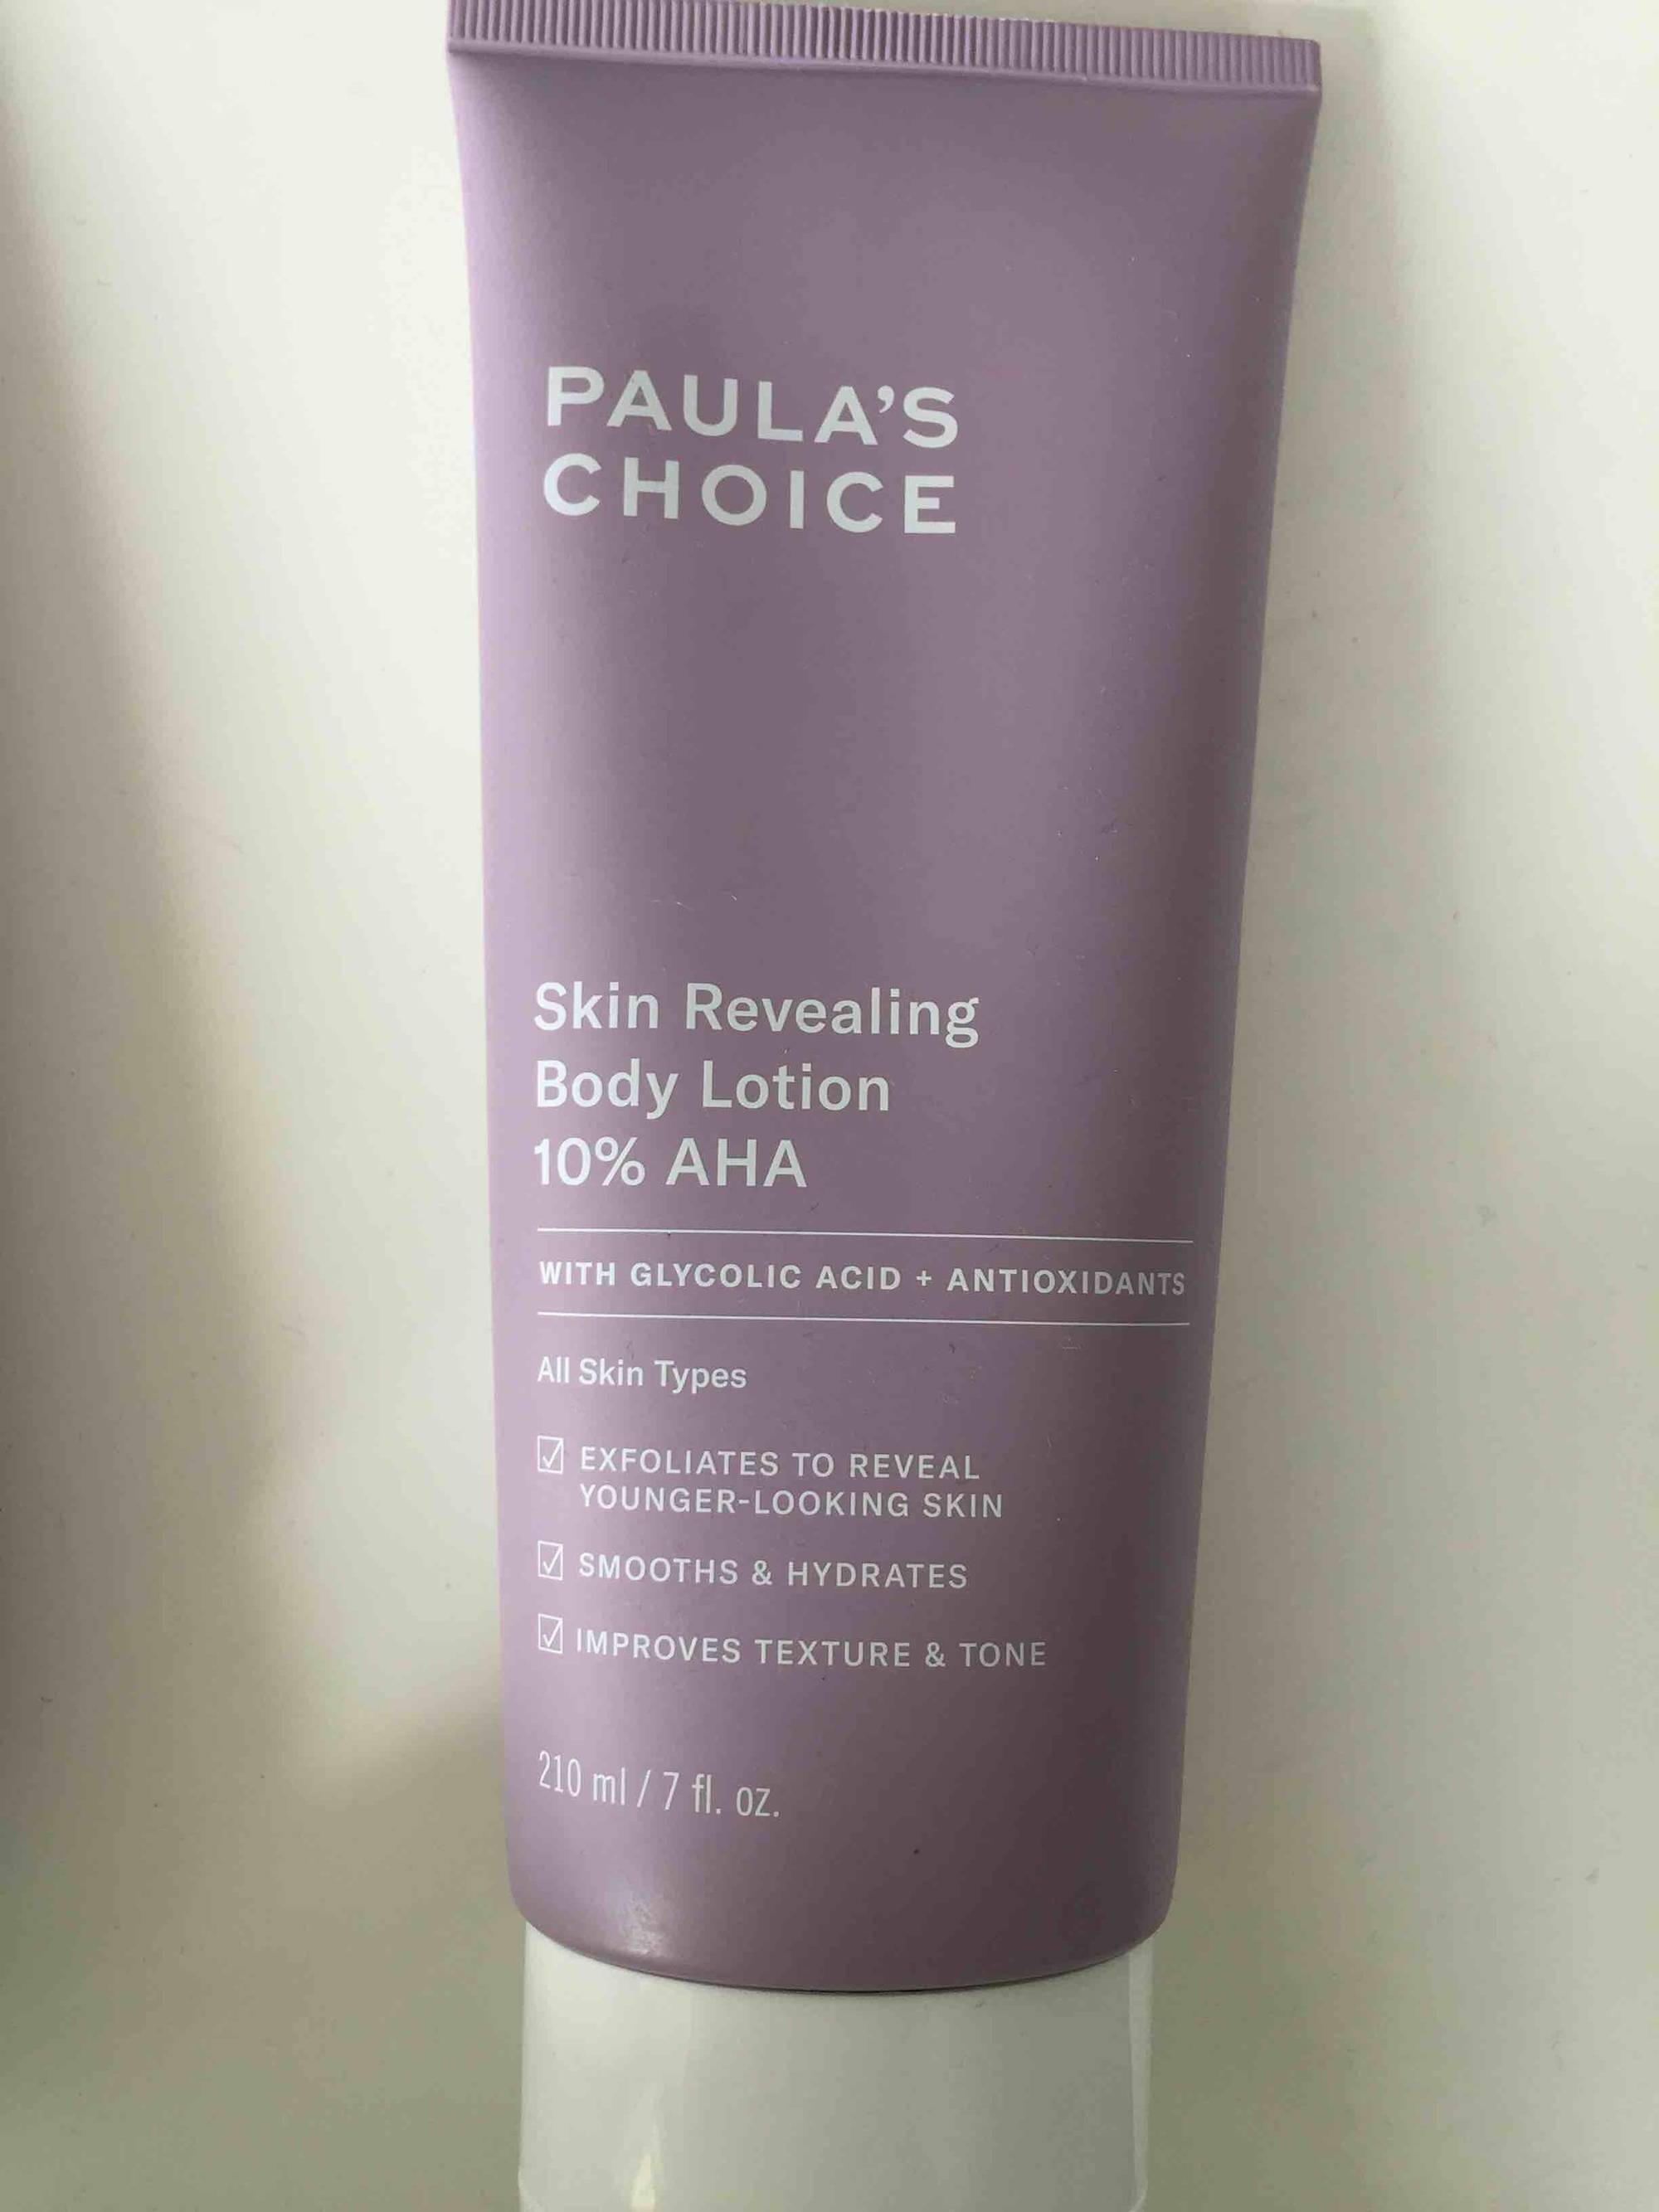 PAULA'S CHOICE - Skin revealing - Body lotion 10% AHA